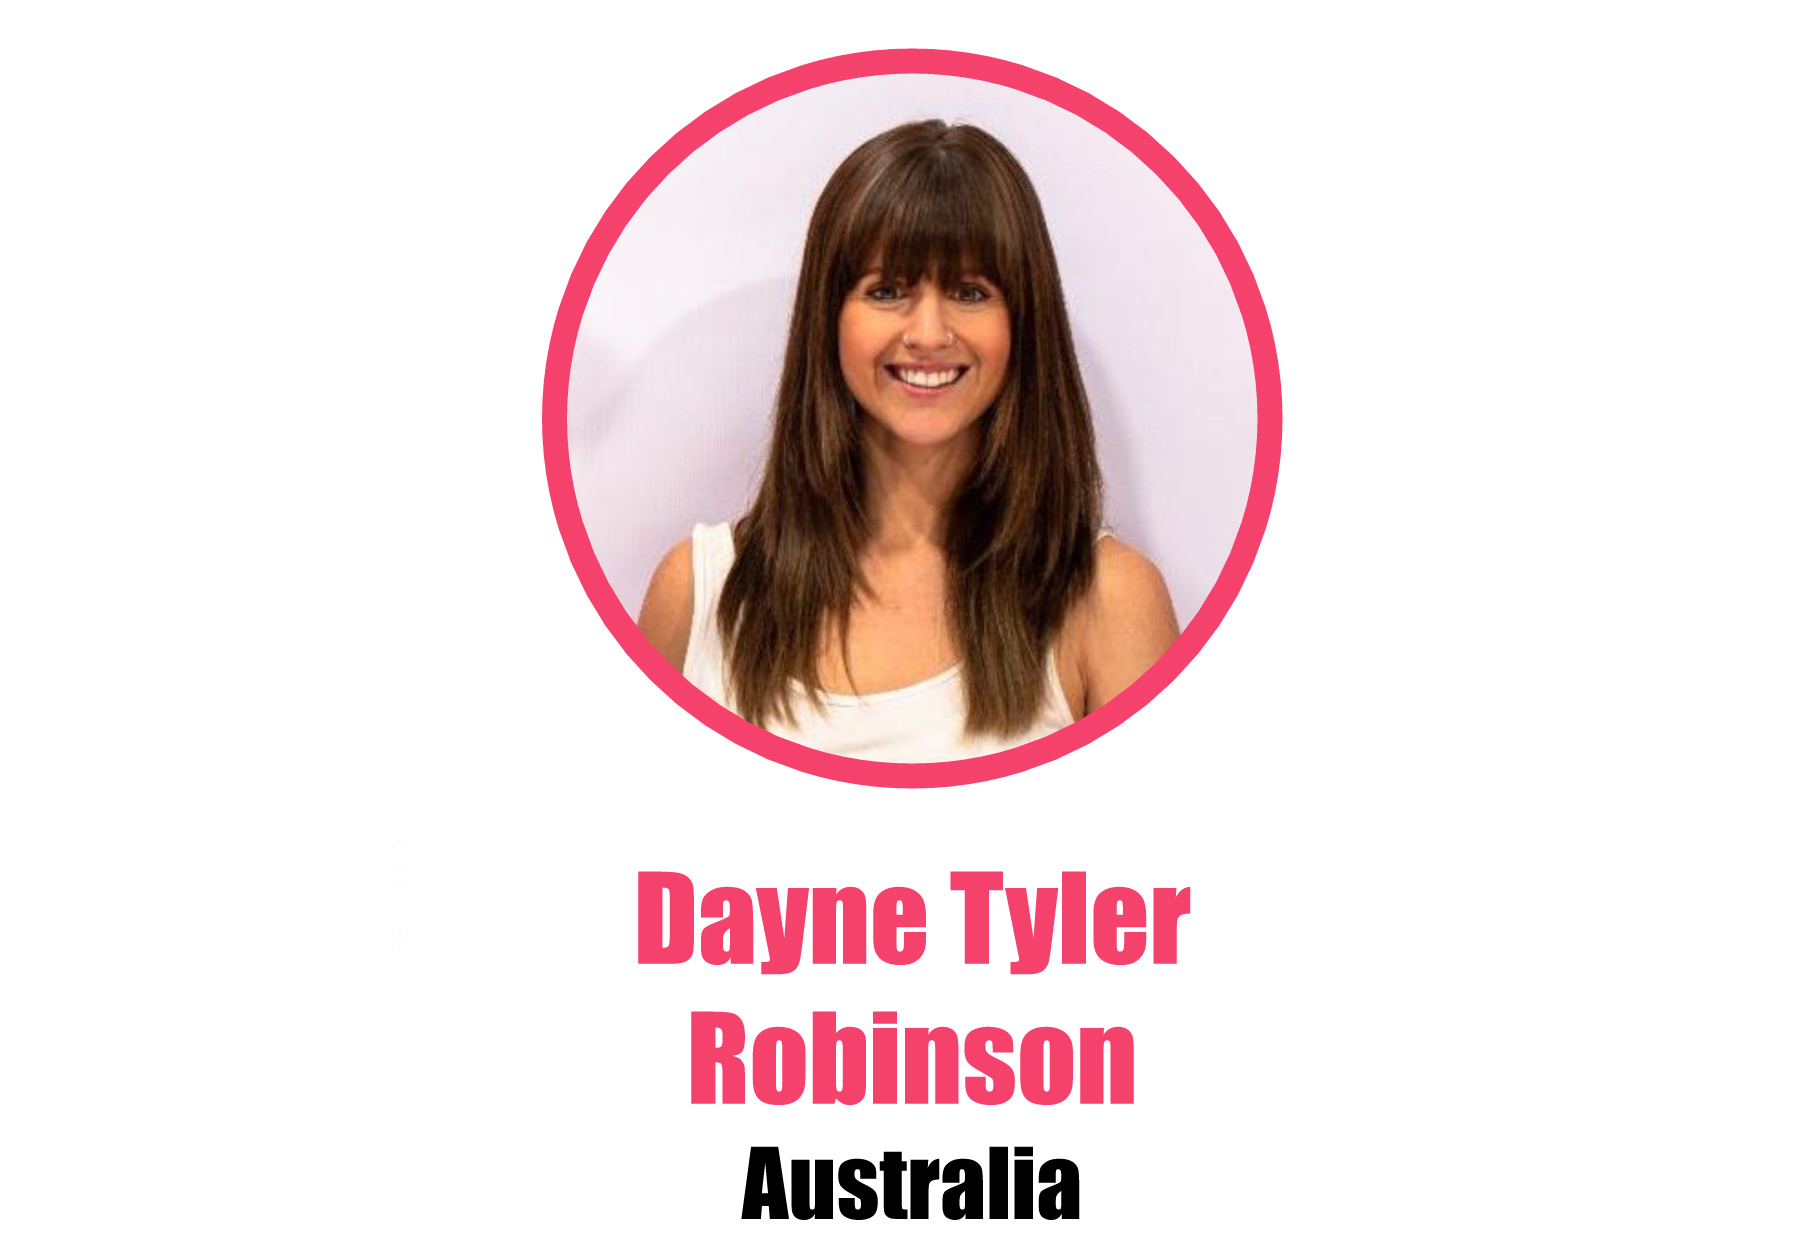 Australia_Dayne Tyler Robinson